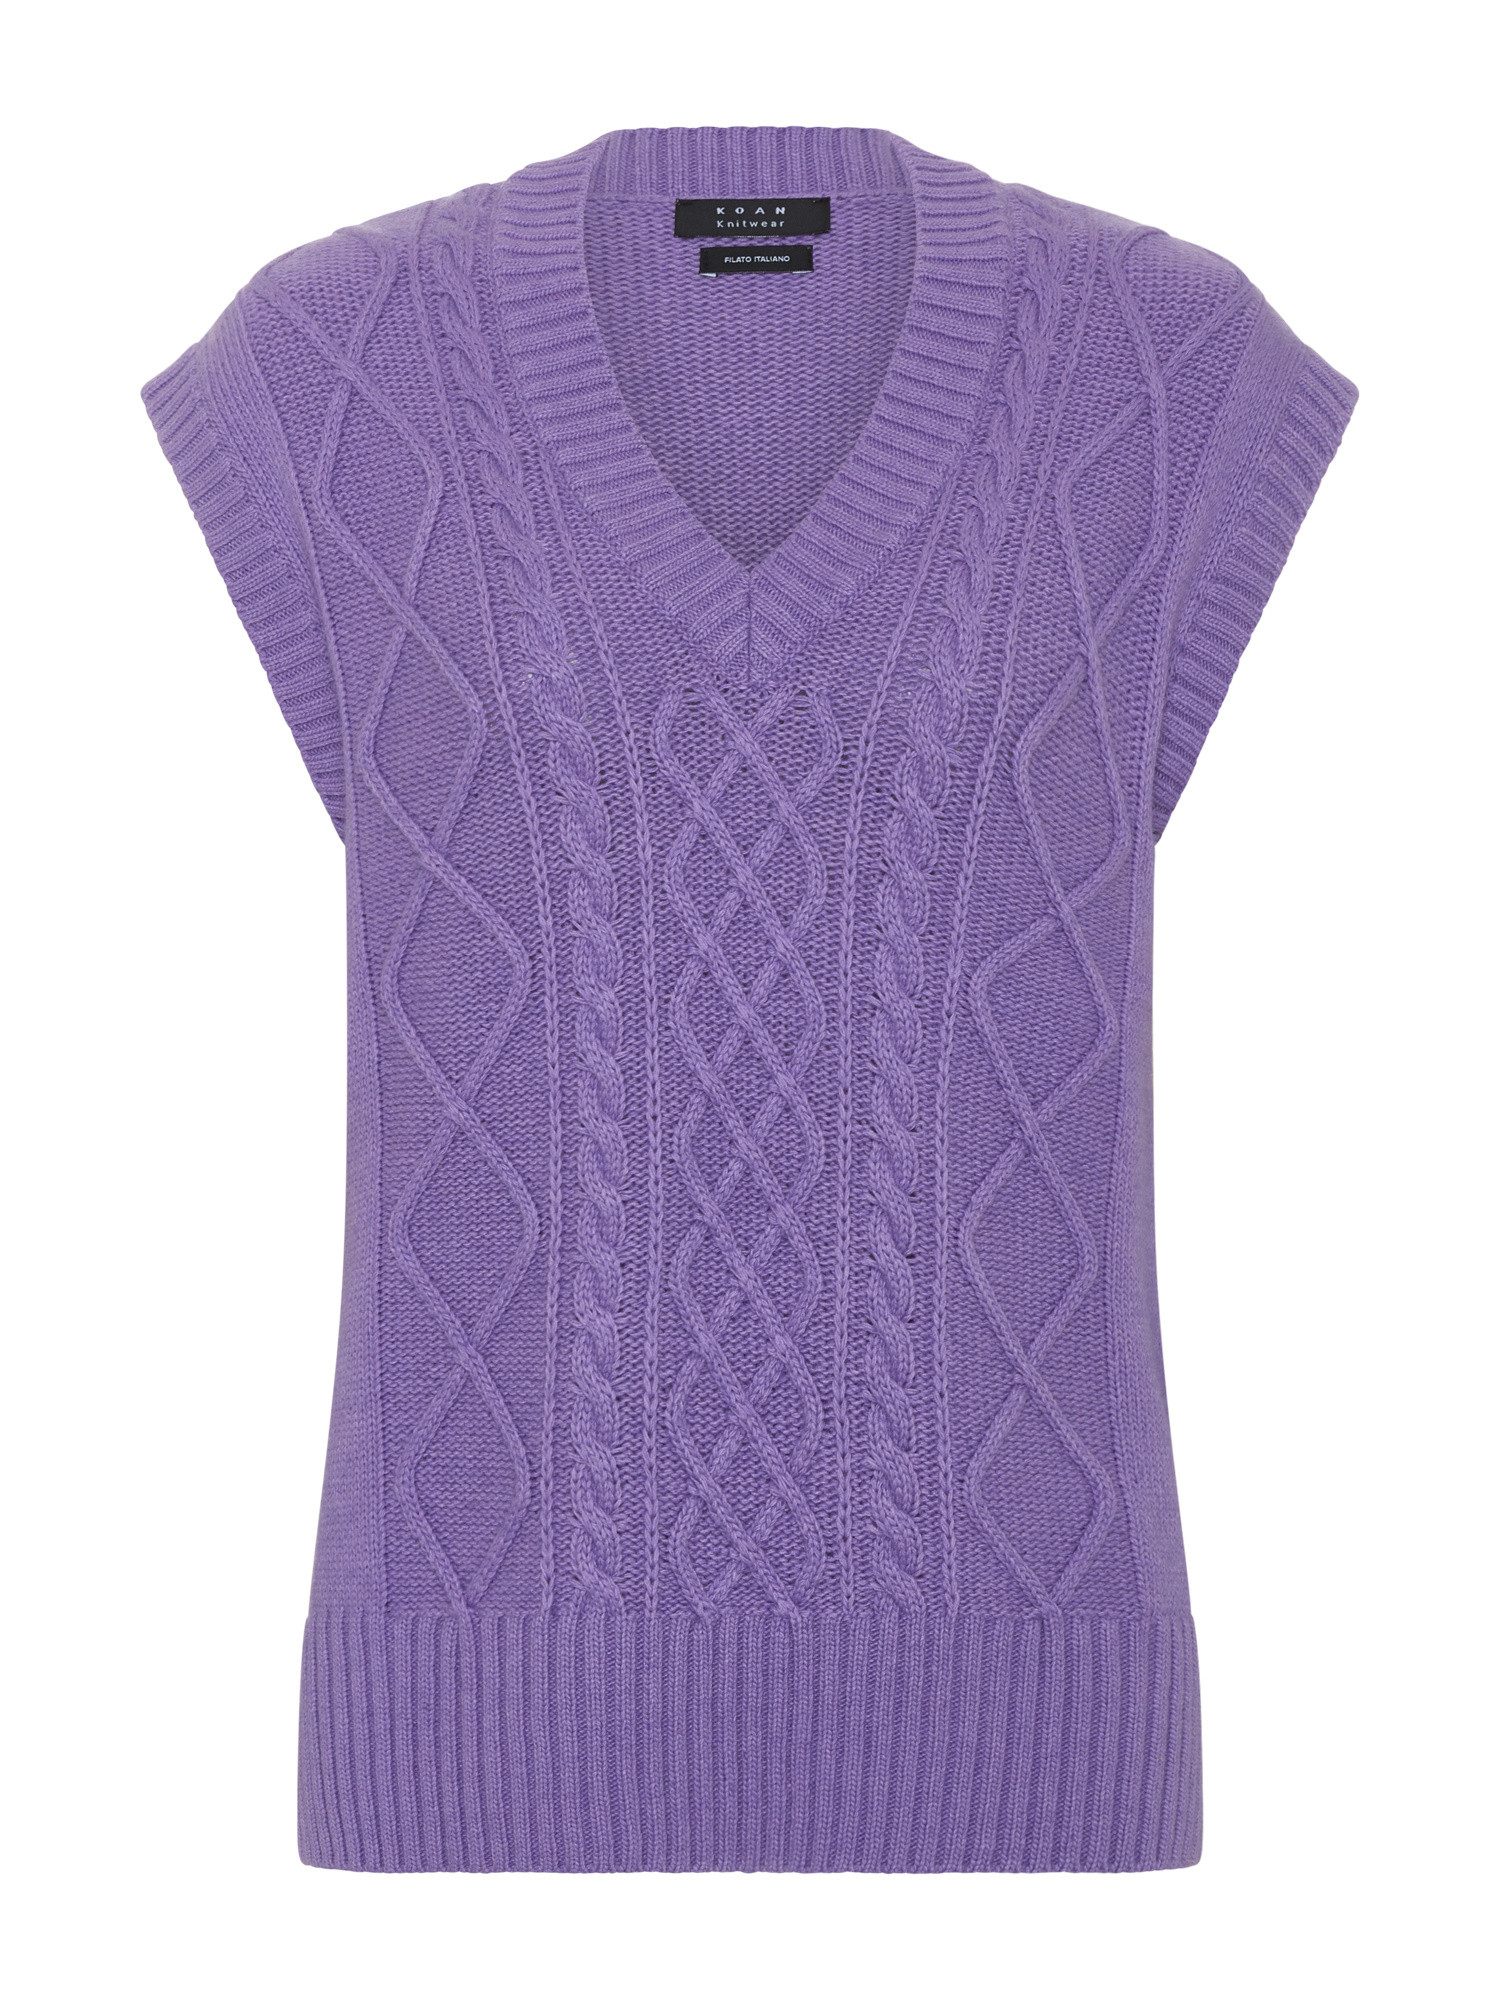 Koan - V-neck vest with diamond pattern, Purple Lilac, large image number 0